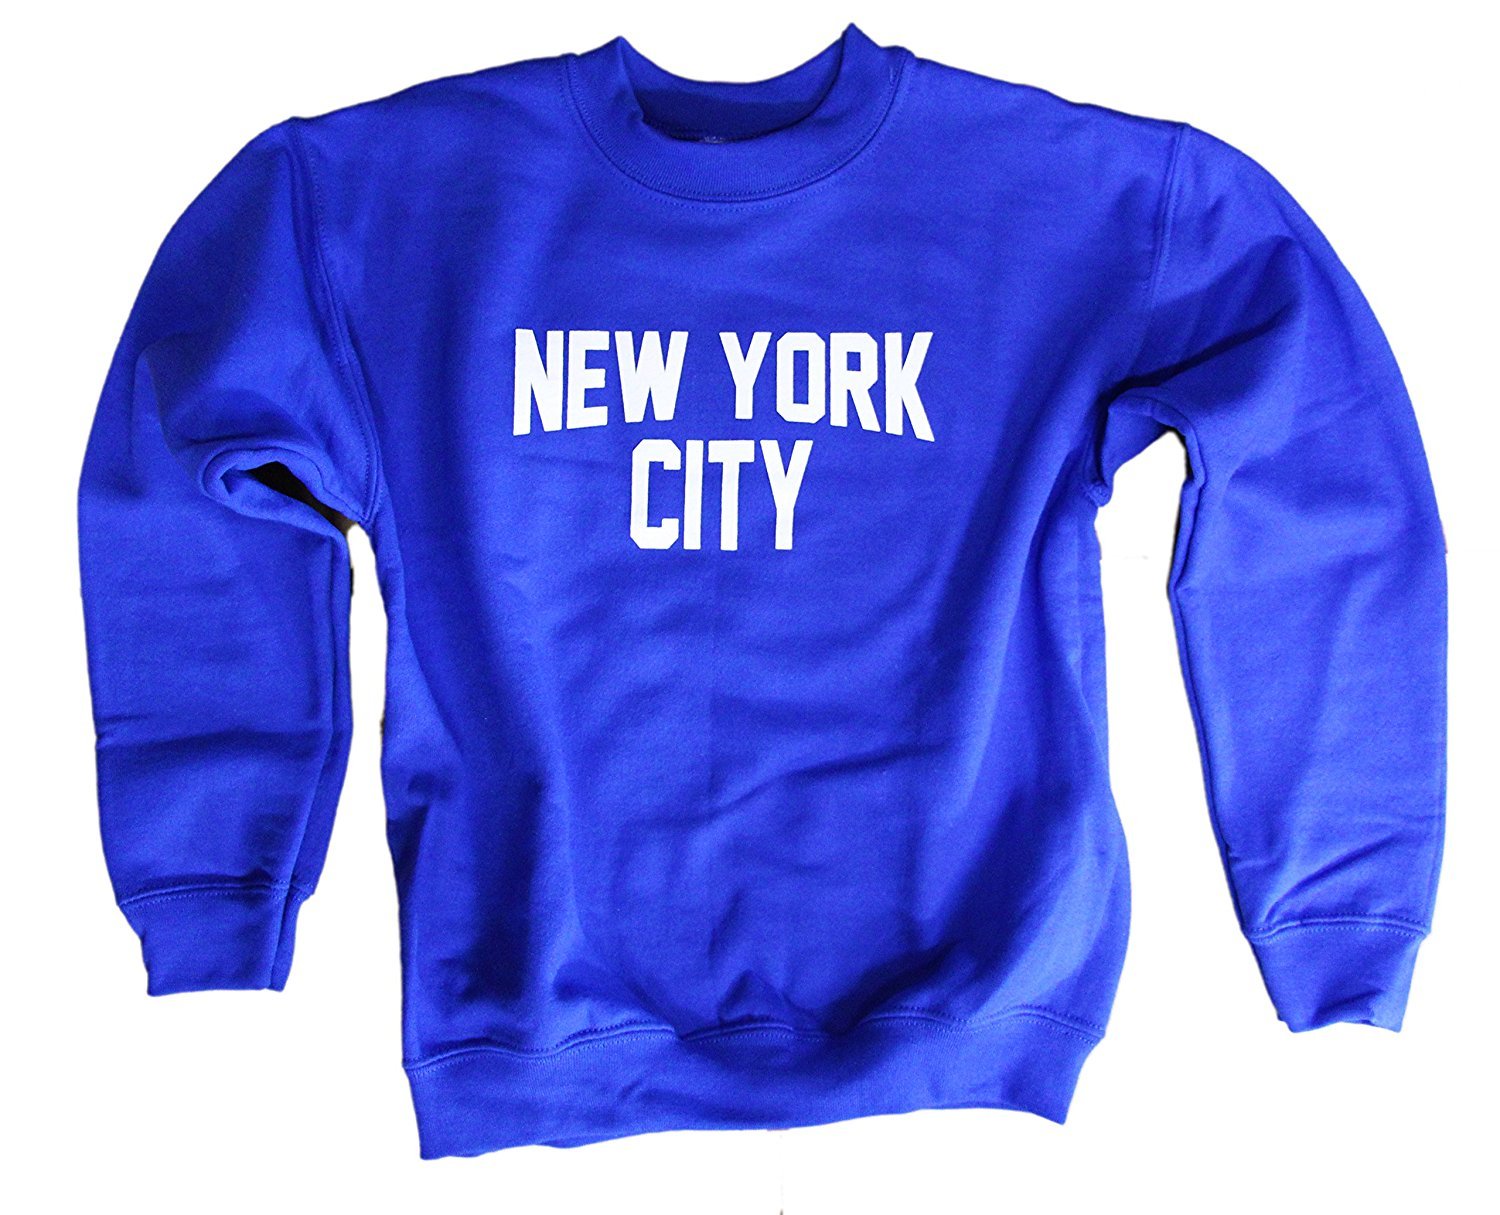 New York City Kids Sweatshirt Screenprinted Lennon Boys Shirt Royal Blue